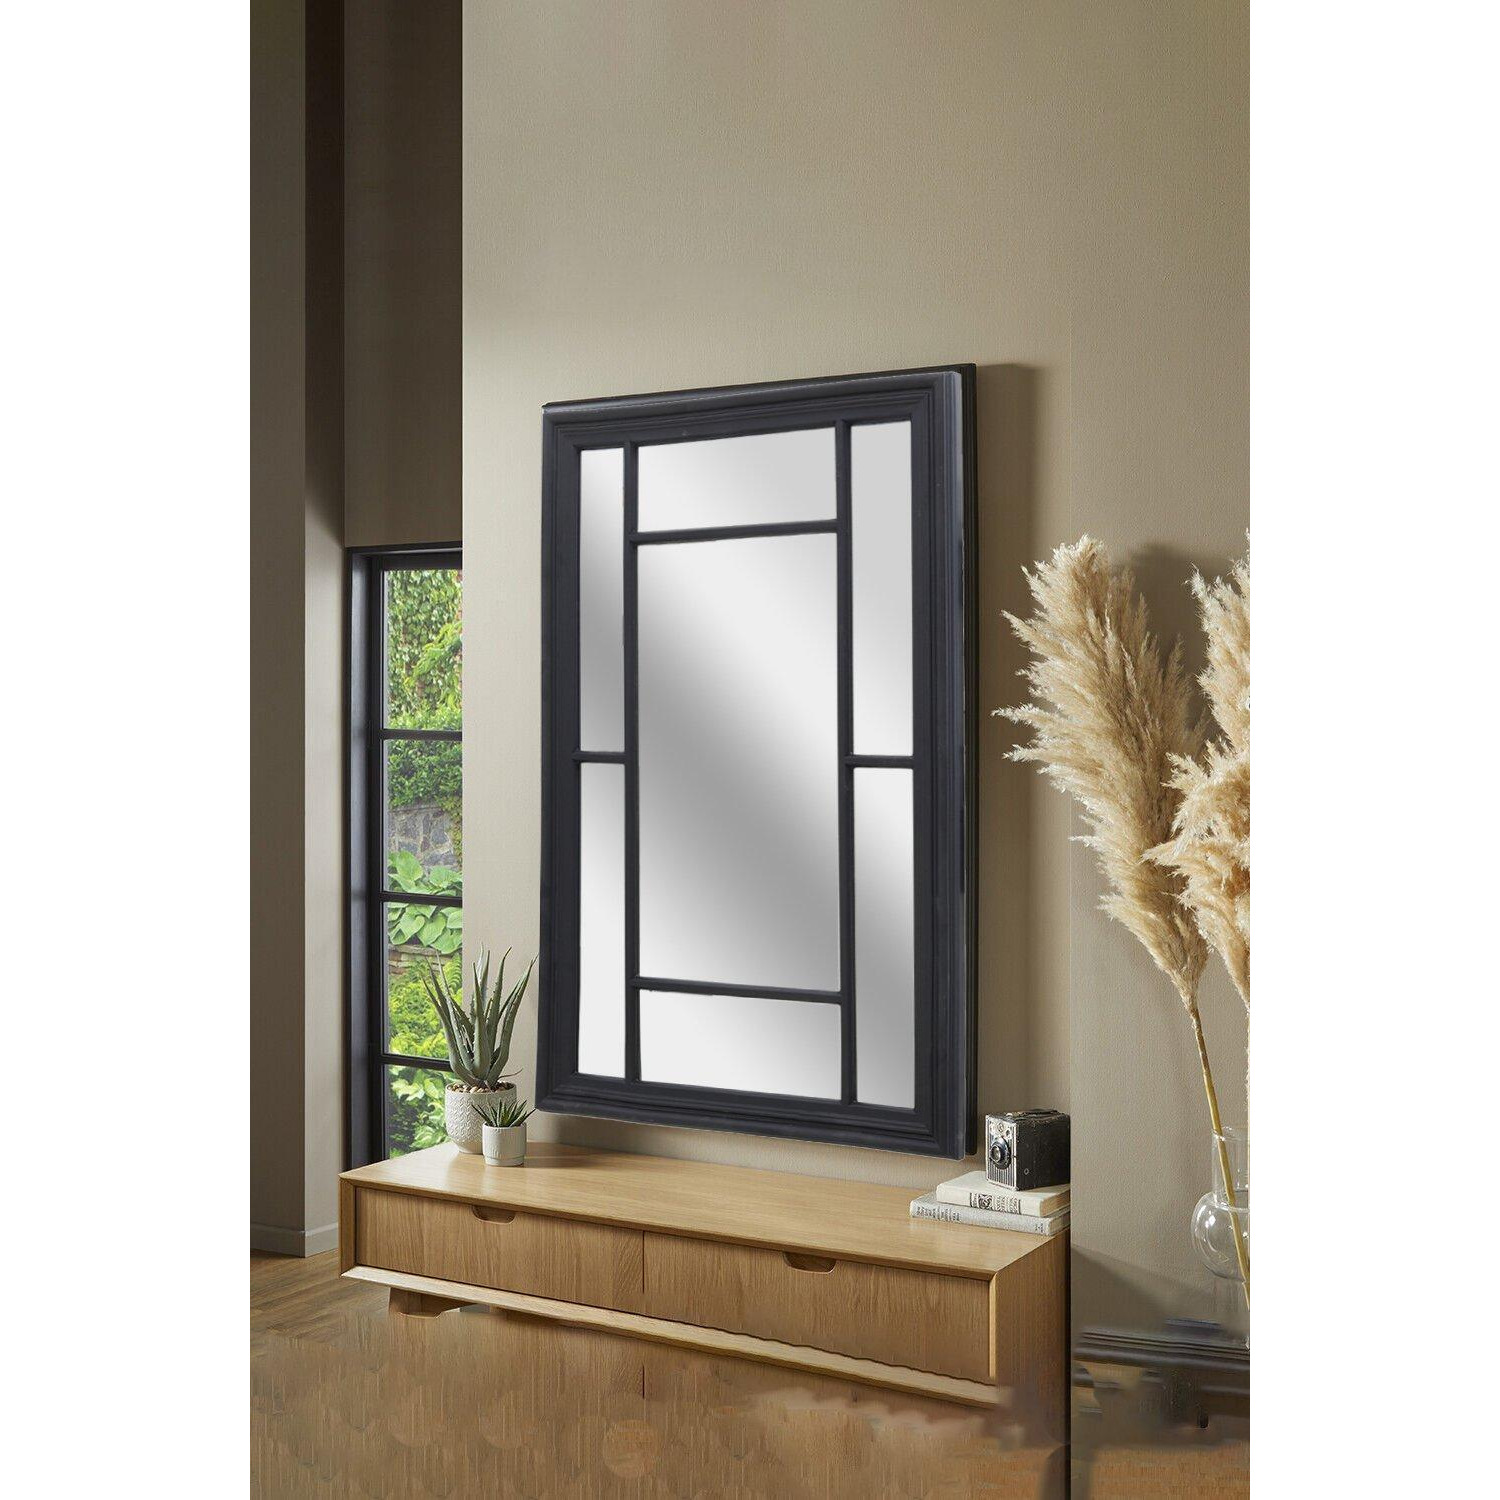 Black Rectangular Decorative Window Mirror - image 1